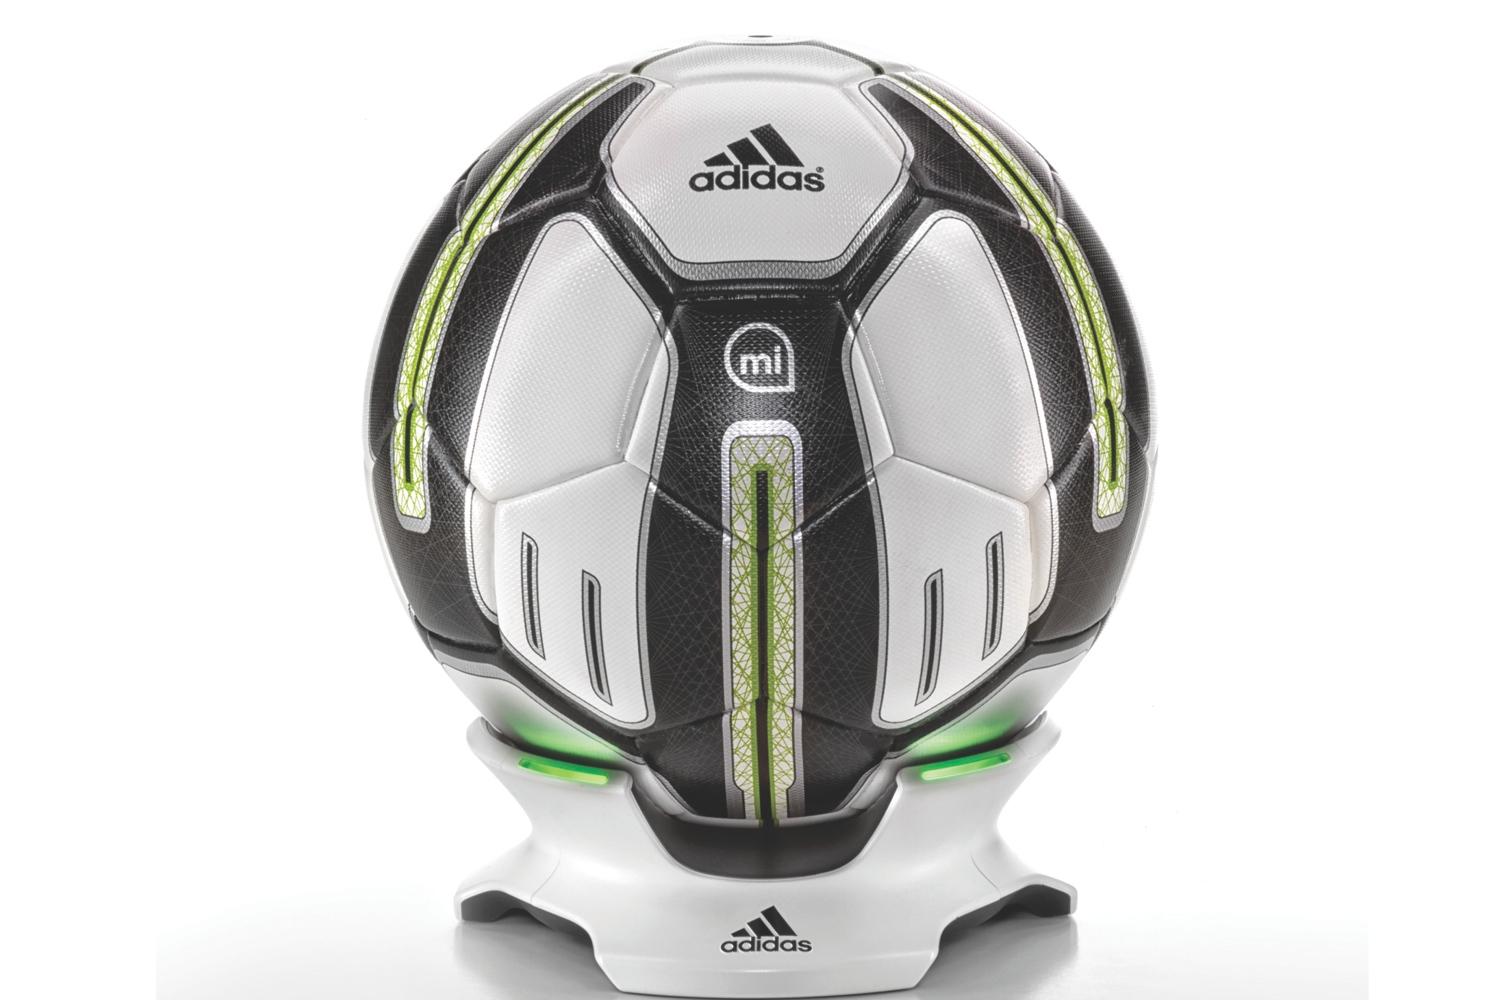 Adidas Smart Ball Uses Sensors, Bluetooth Digital Trends